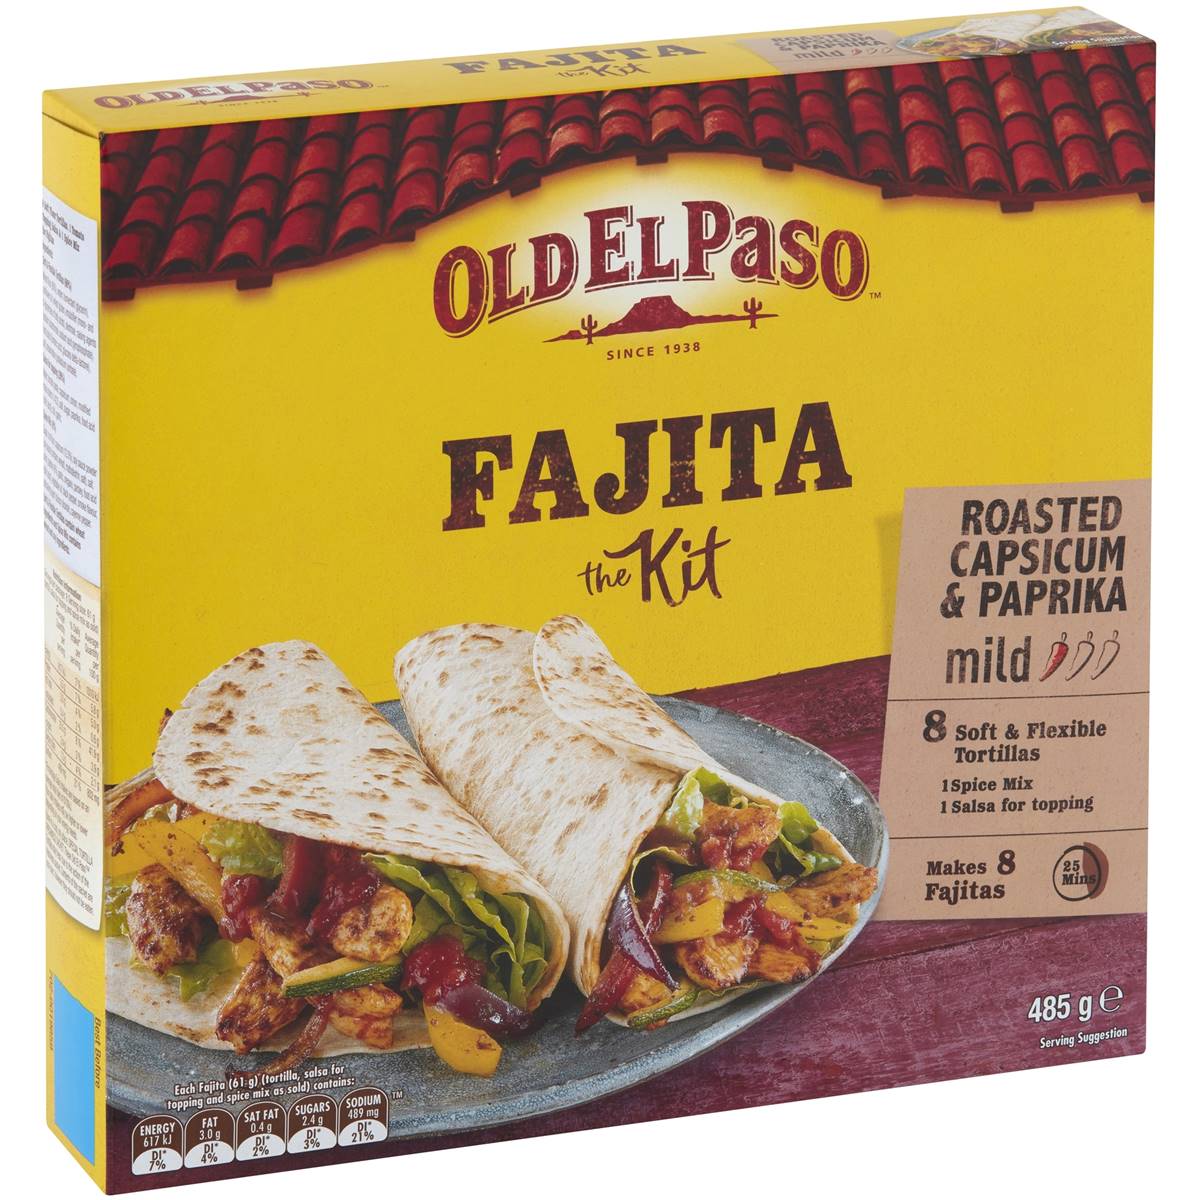 Old El Paso Fajita Kit 485g